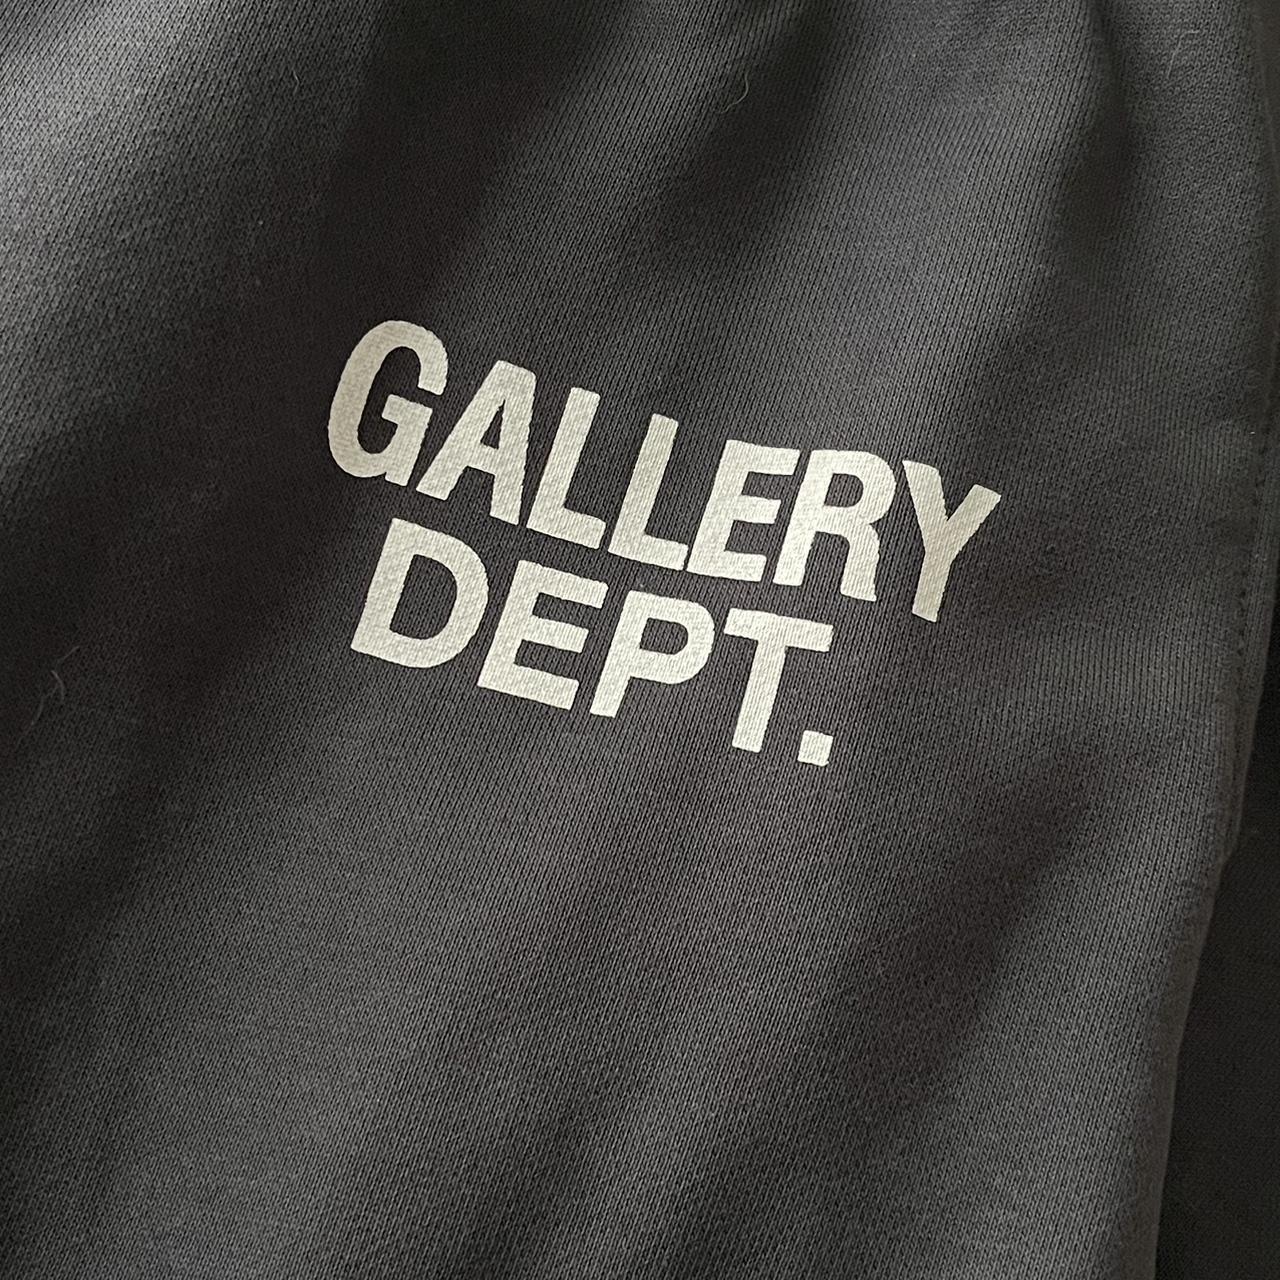 Gallery Dept Medium Dark Grey Sweatpants - Depop